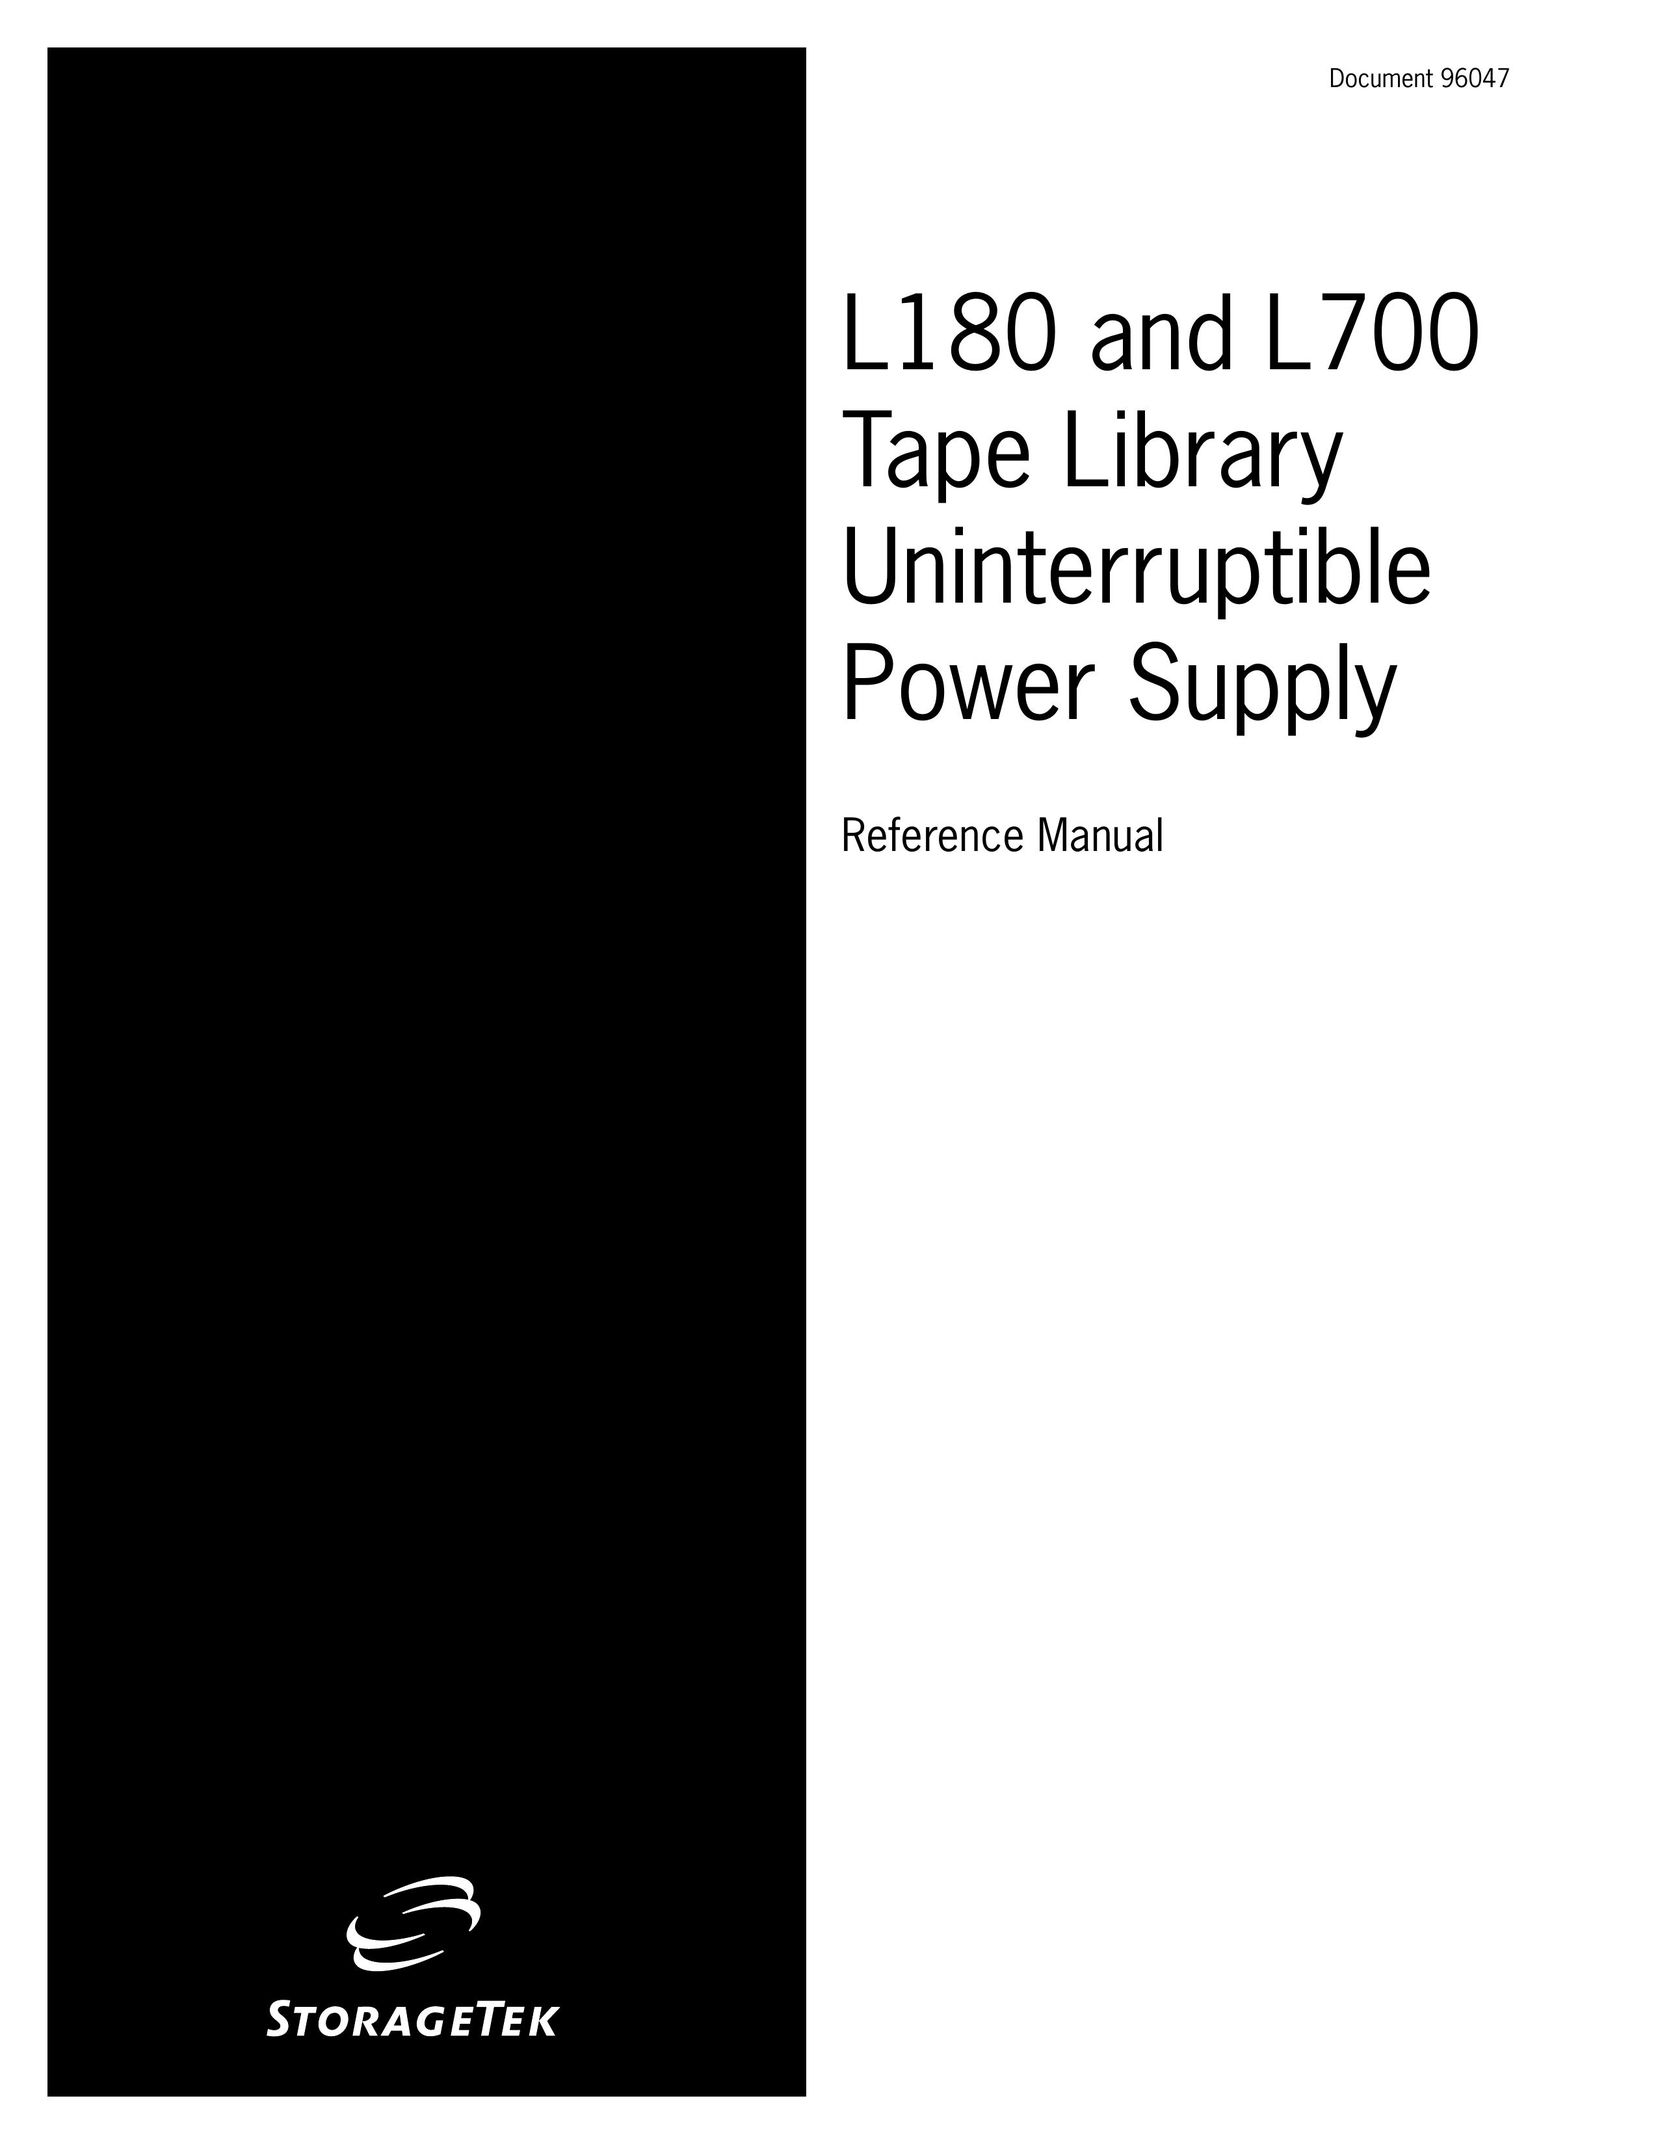 StorageTek L180 Power Supply User Manual